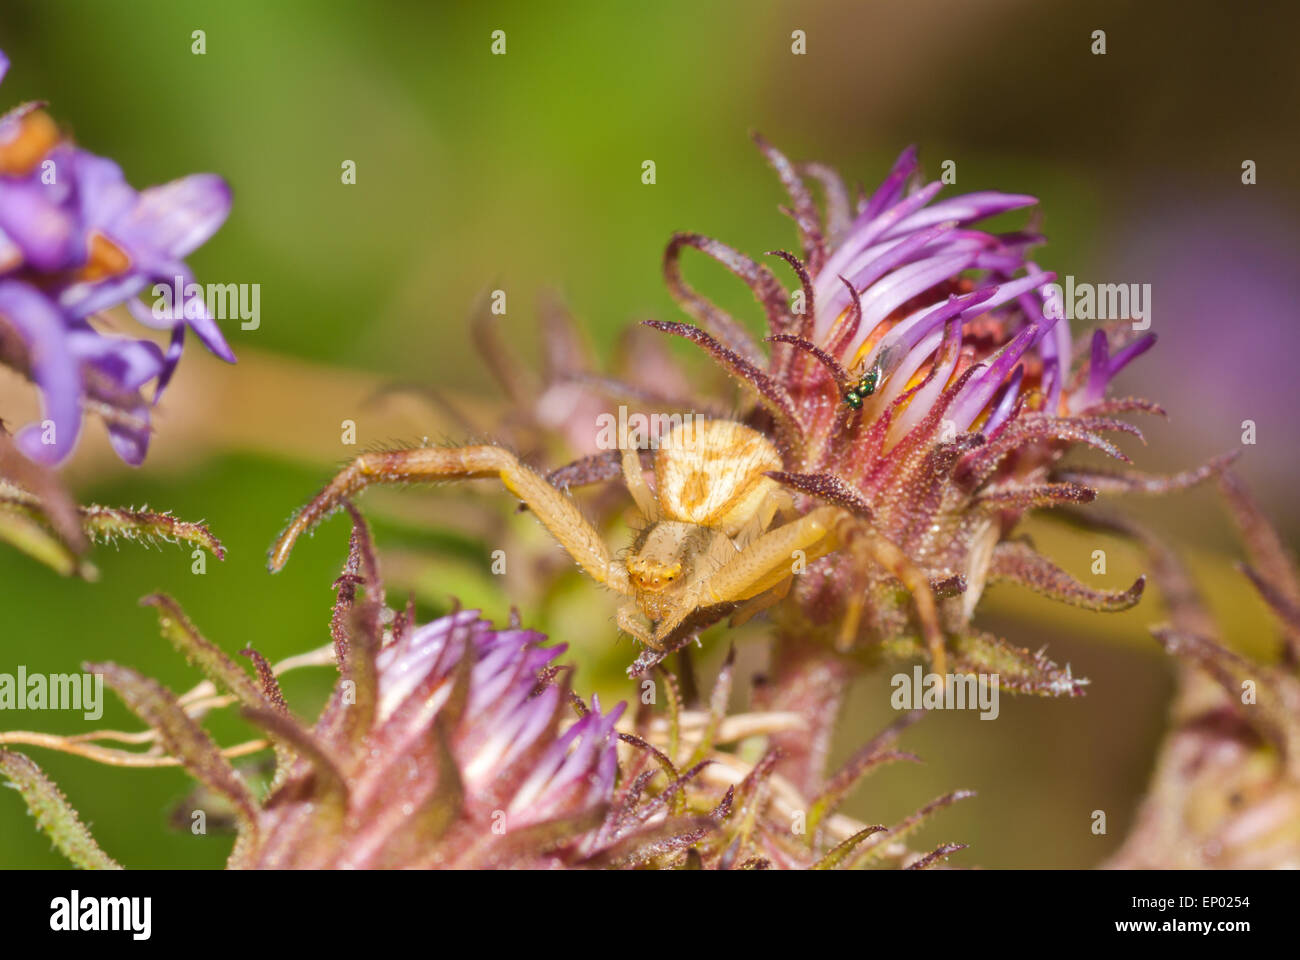 Golden rod crab spider, Misumena vatia, hiding among late summer aster blossoms, Symphyotrichum ciliolatum. Stock Photo